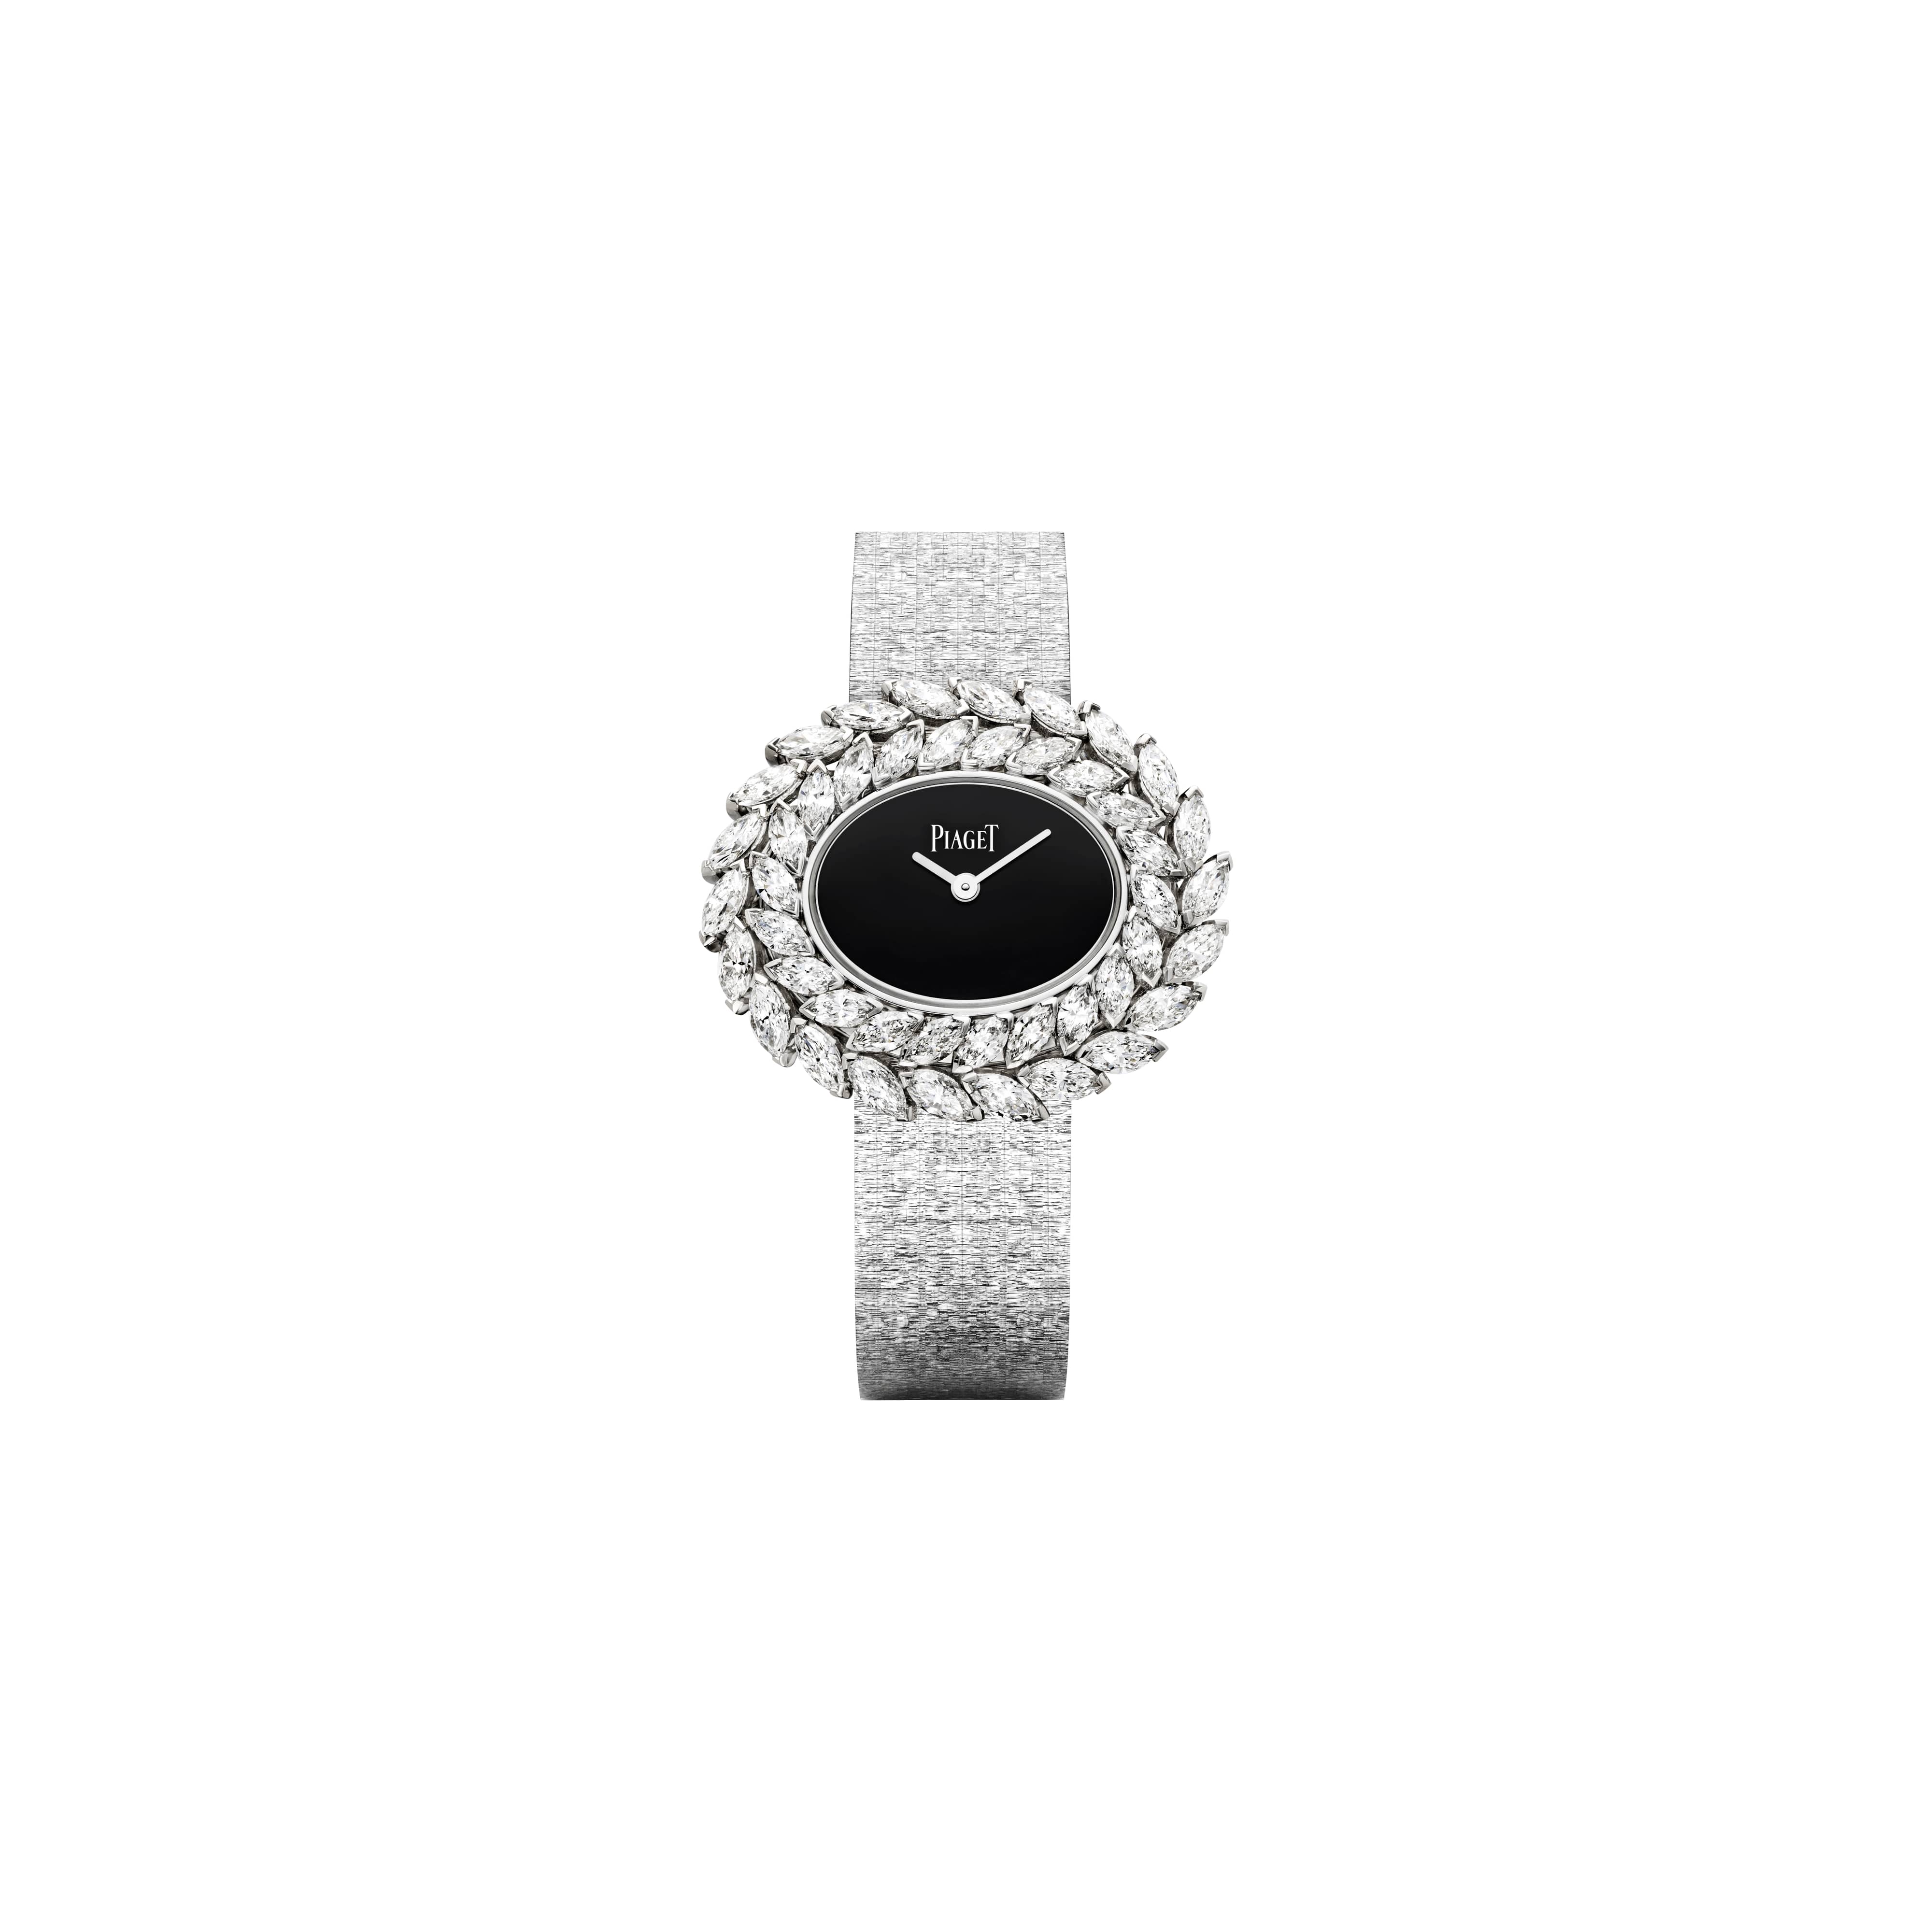 Women’s Diamond Watch - Piaget Luxury Watch G0A39253